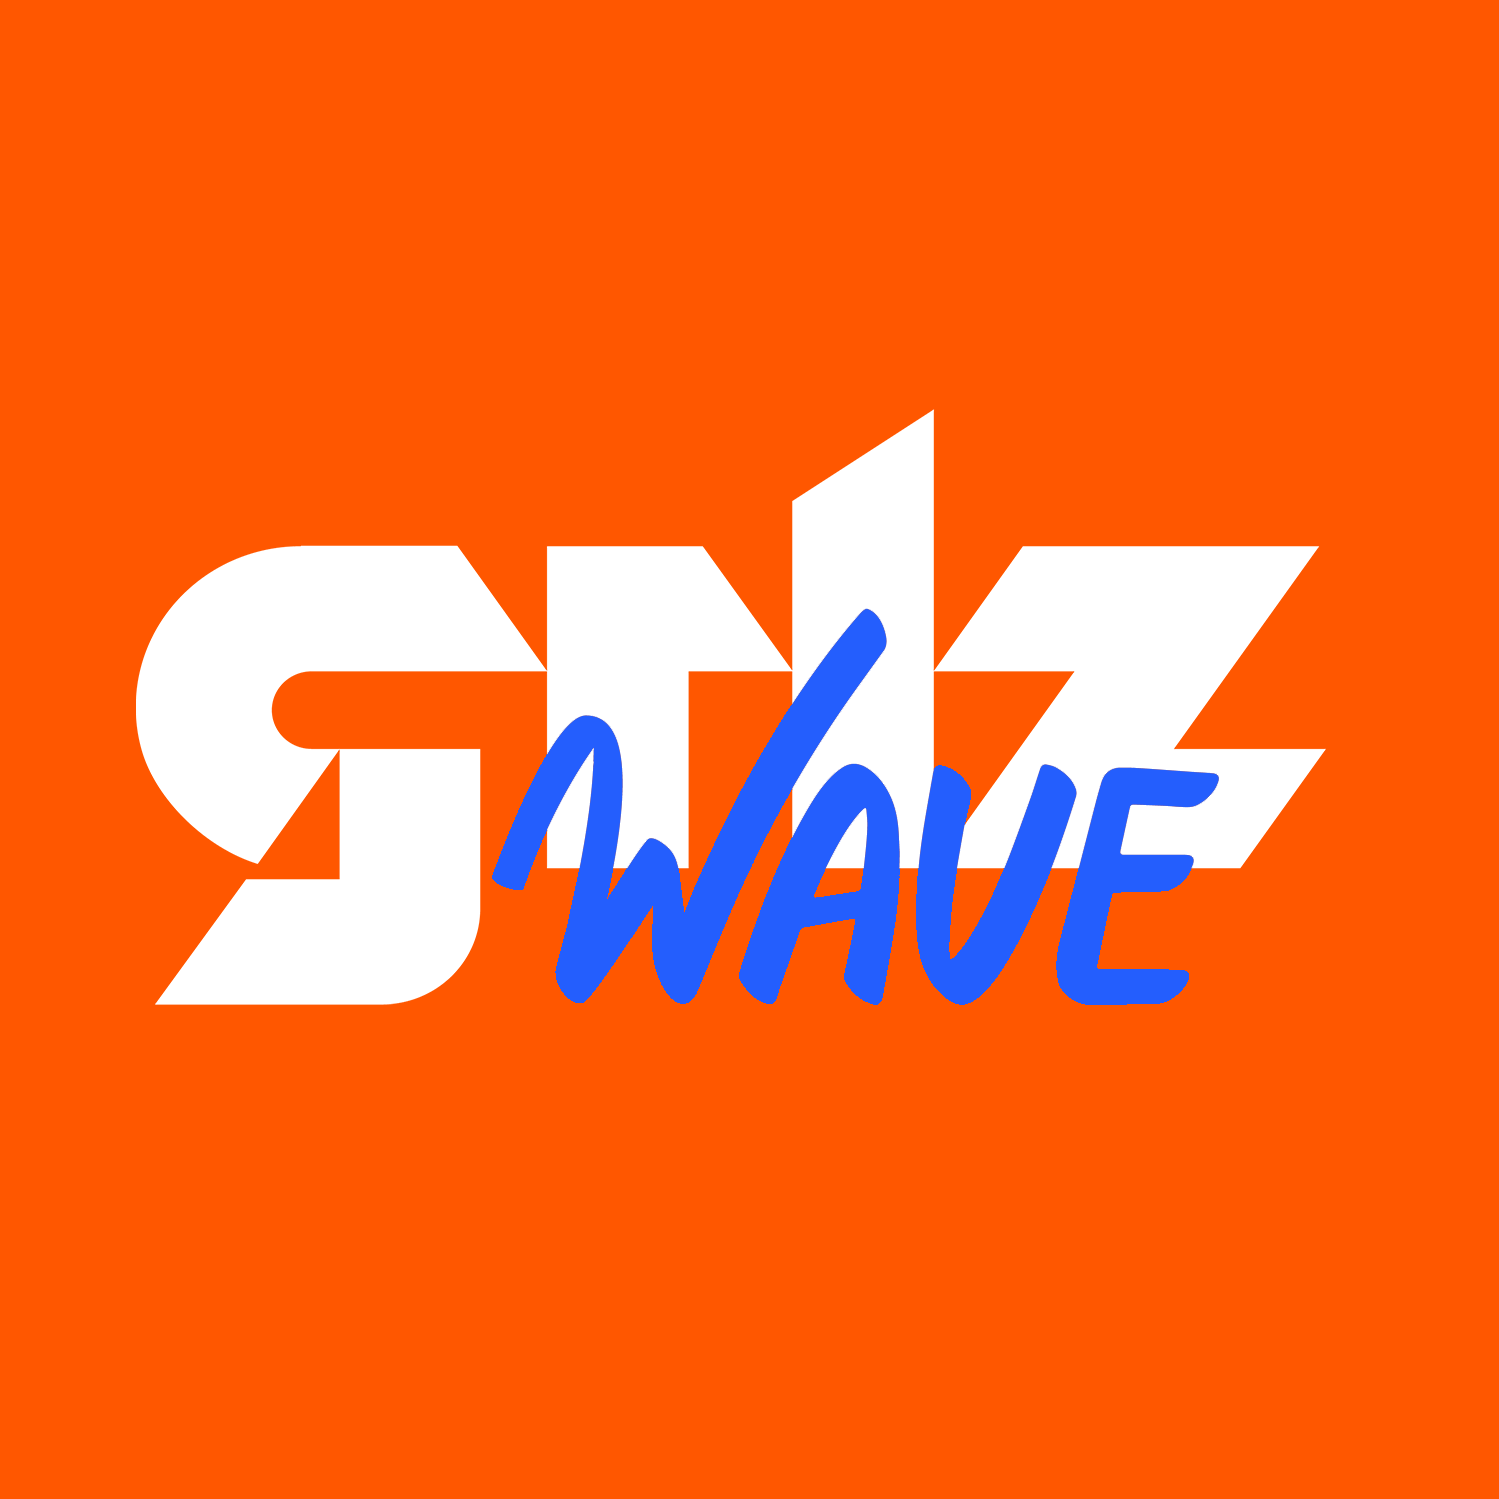 Grlz Wave: ამ კანონპროექტის მიზანია, გაქრეს ხელისუფლებისადმი კრიტიკულად განწყობილი ორგანიზაციები და მედია